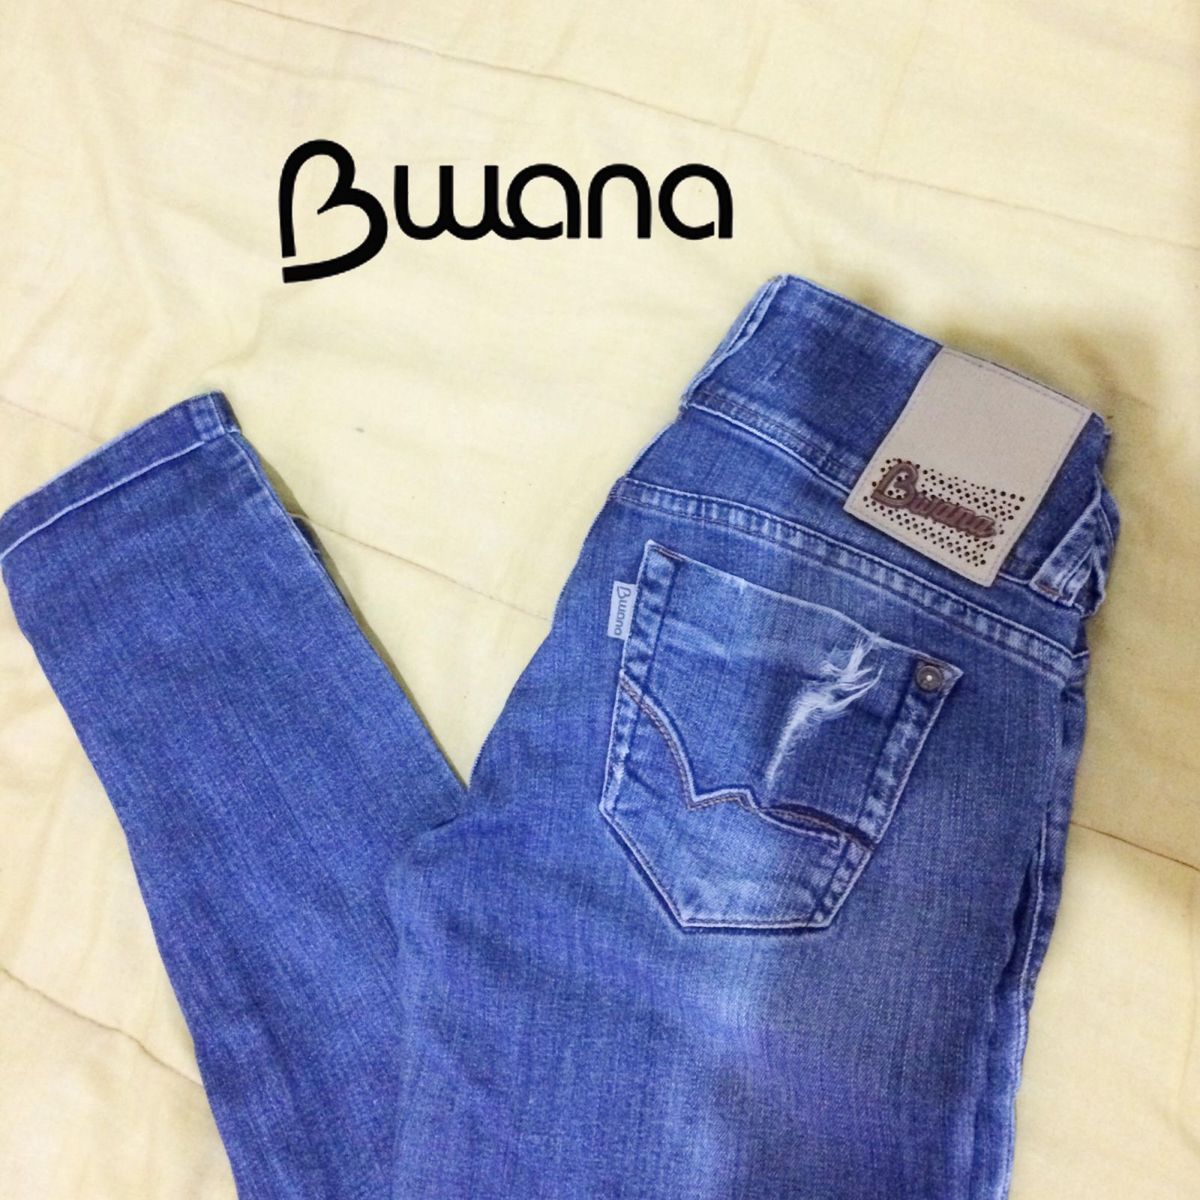 calca jeans bwana comprar online